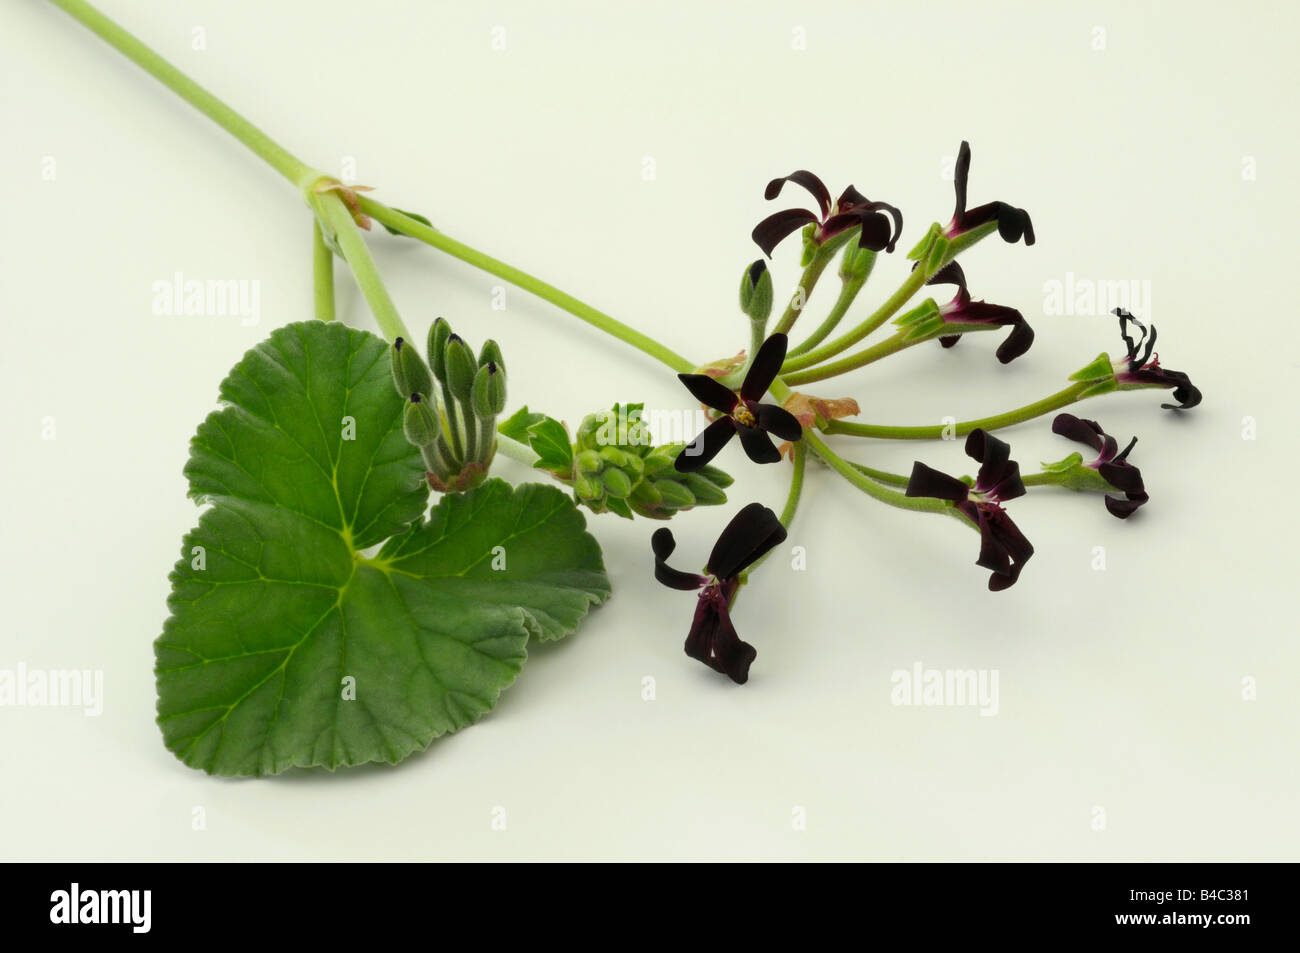 Umckaloabo (Pelargonium reniforme, Pelargonium sidoides), stem with flowers and leaves, studio picture Stock Photo